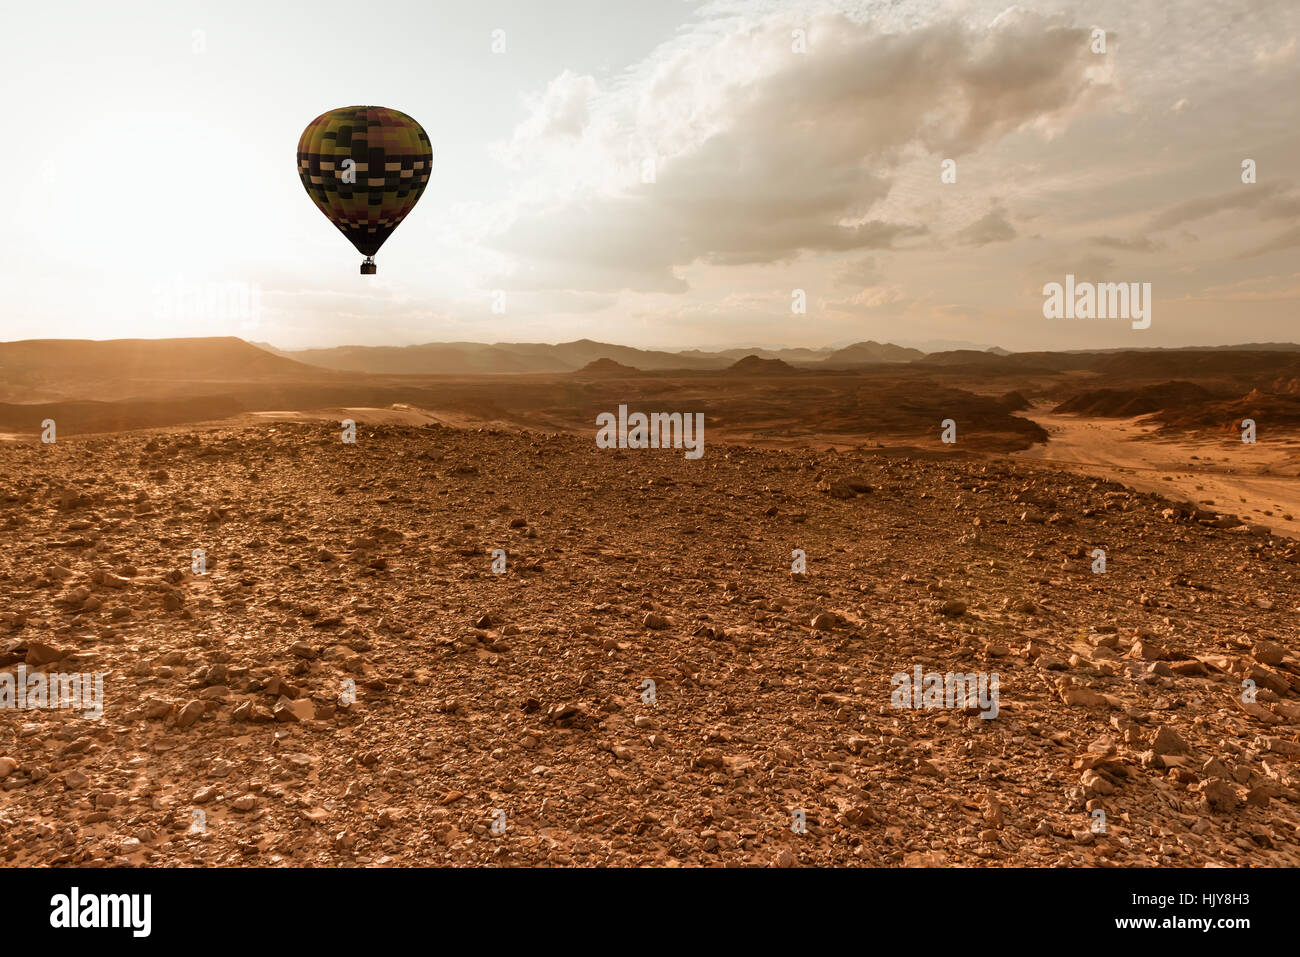 Hot Air Balloon travel over Africa desert Stock Photo